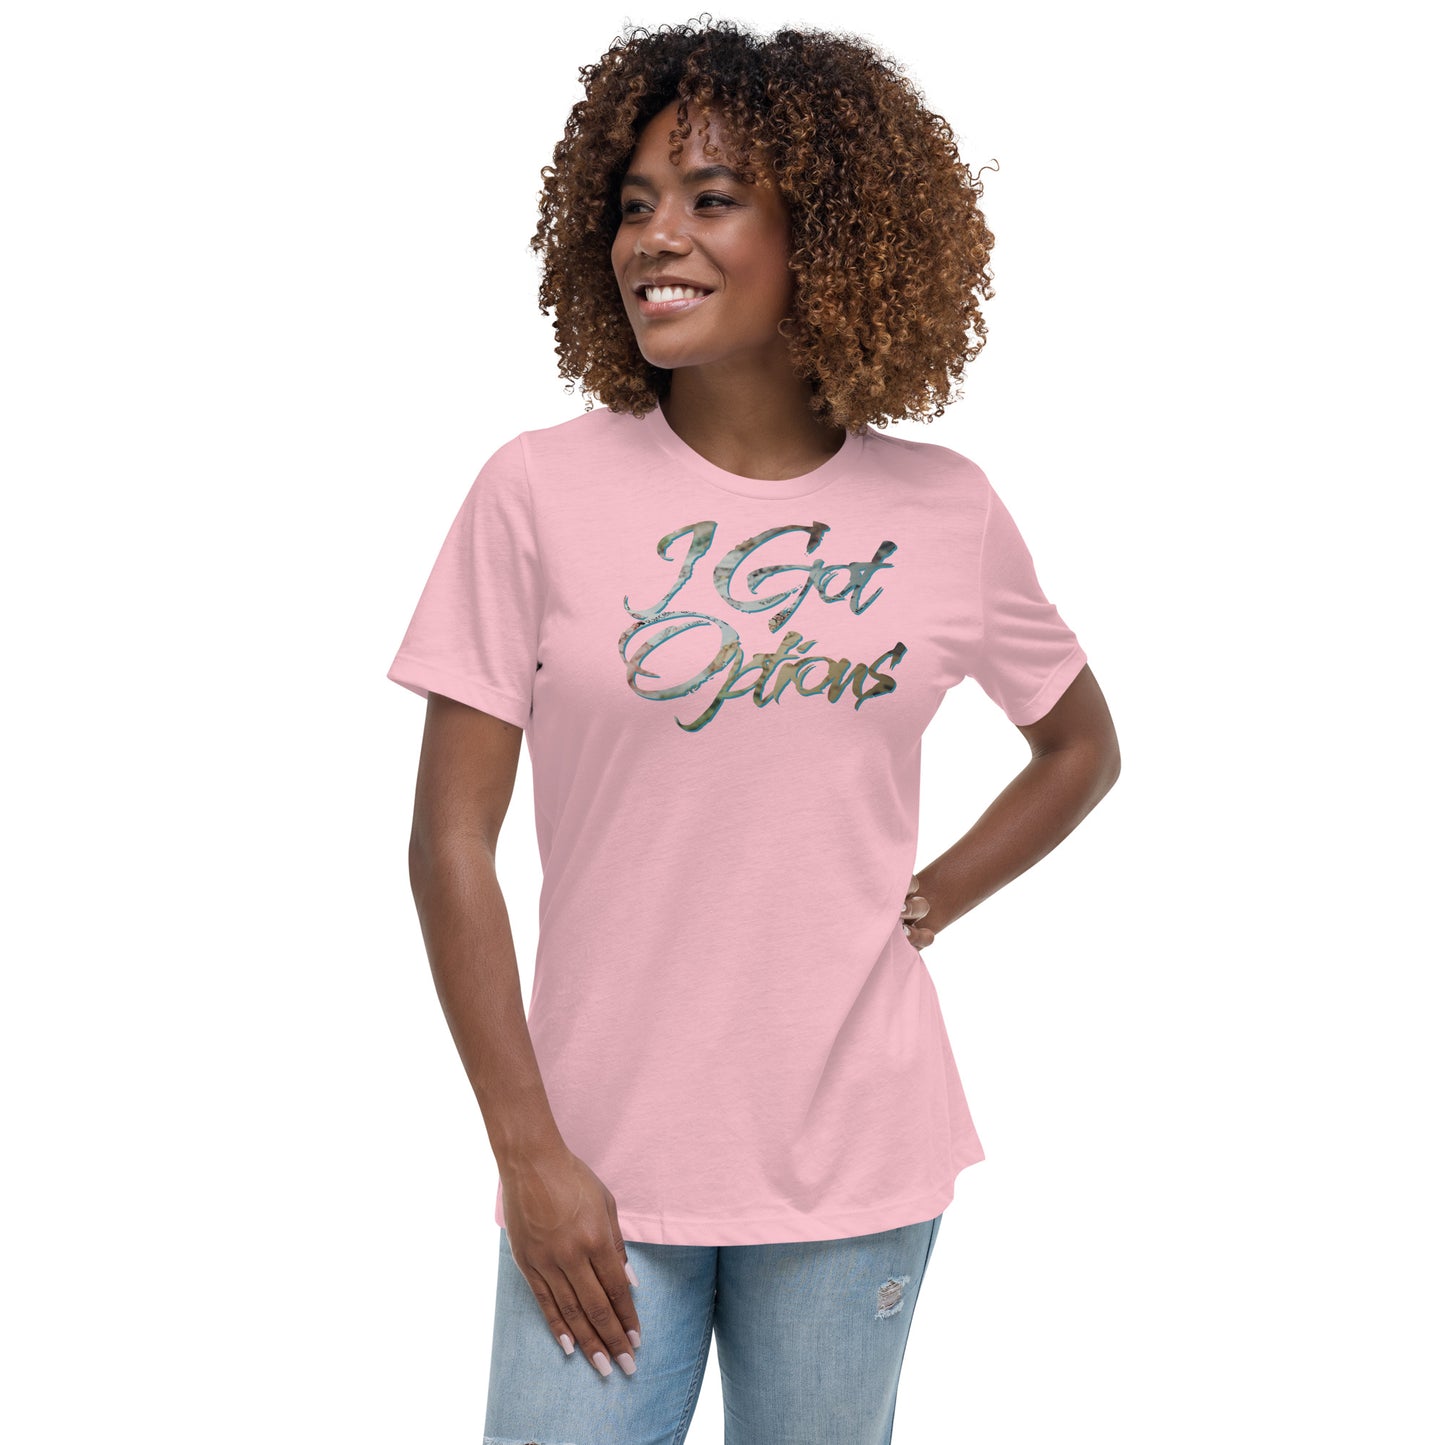 Options Women's T-Shirt